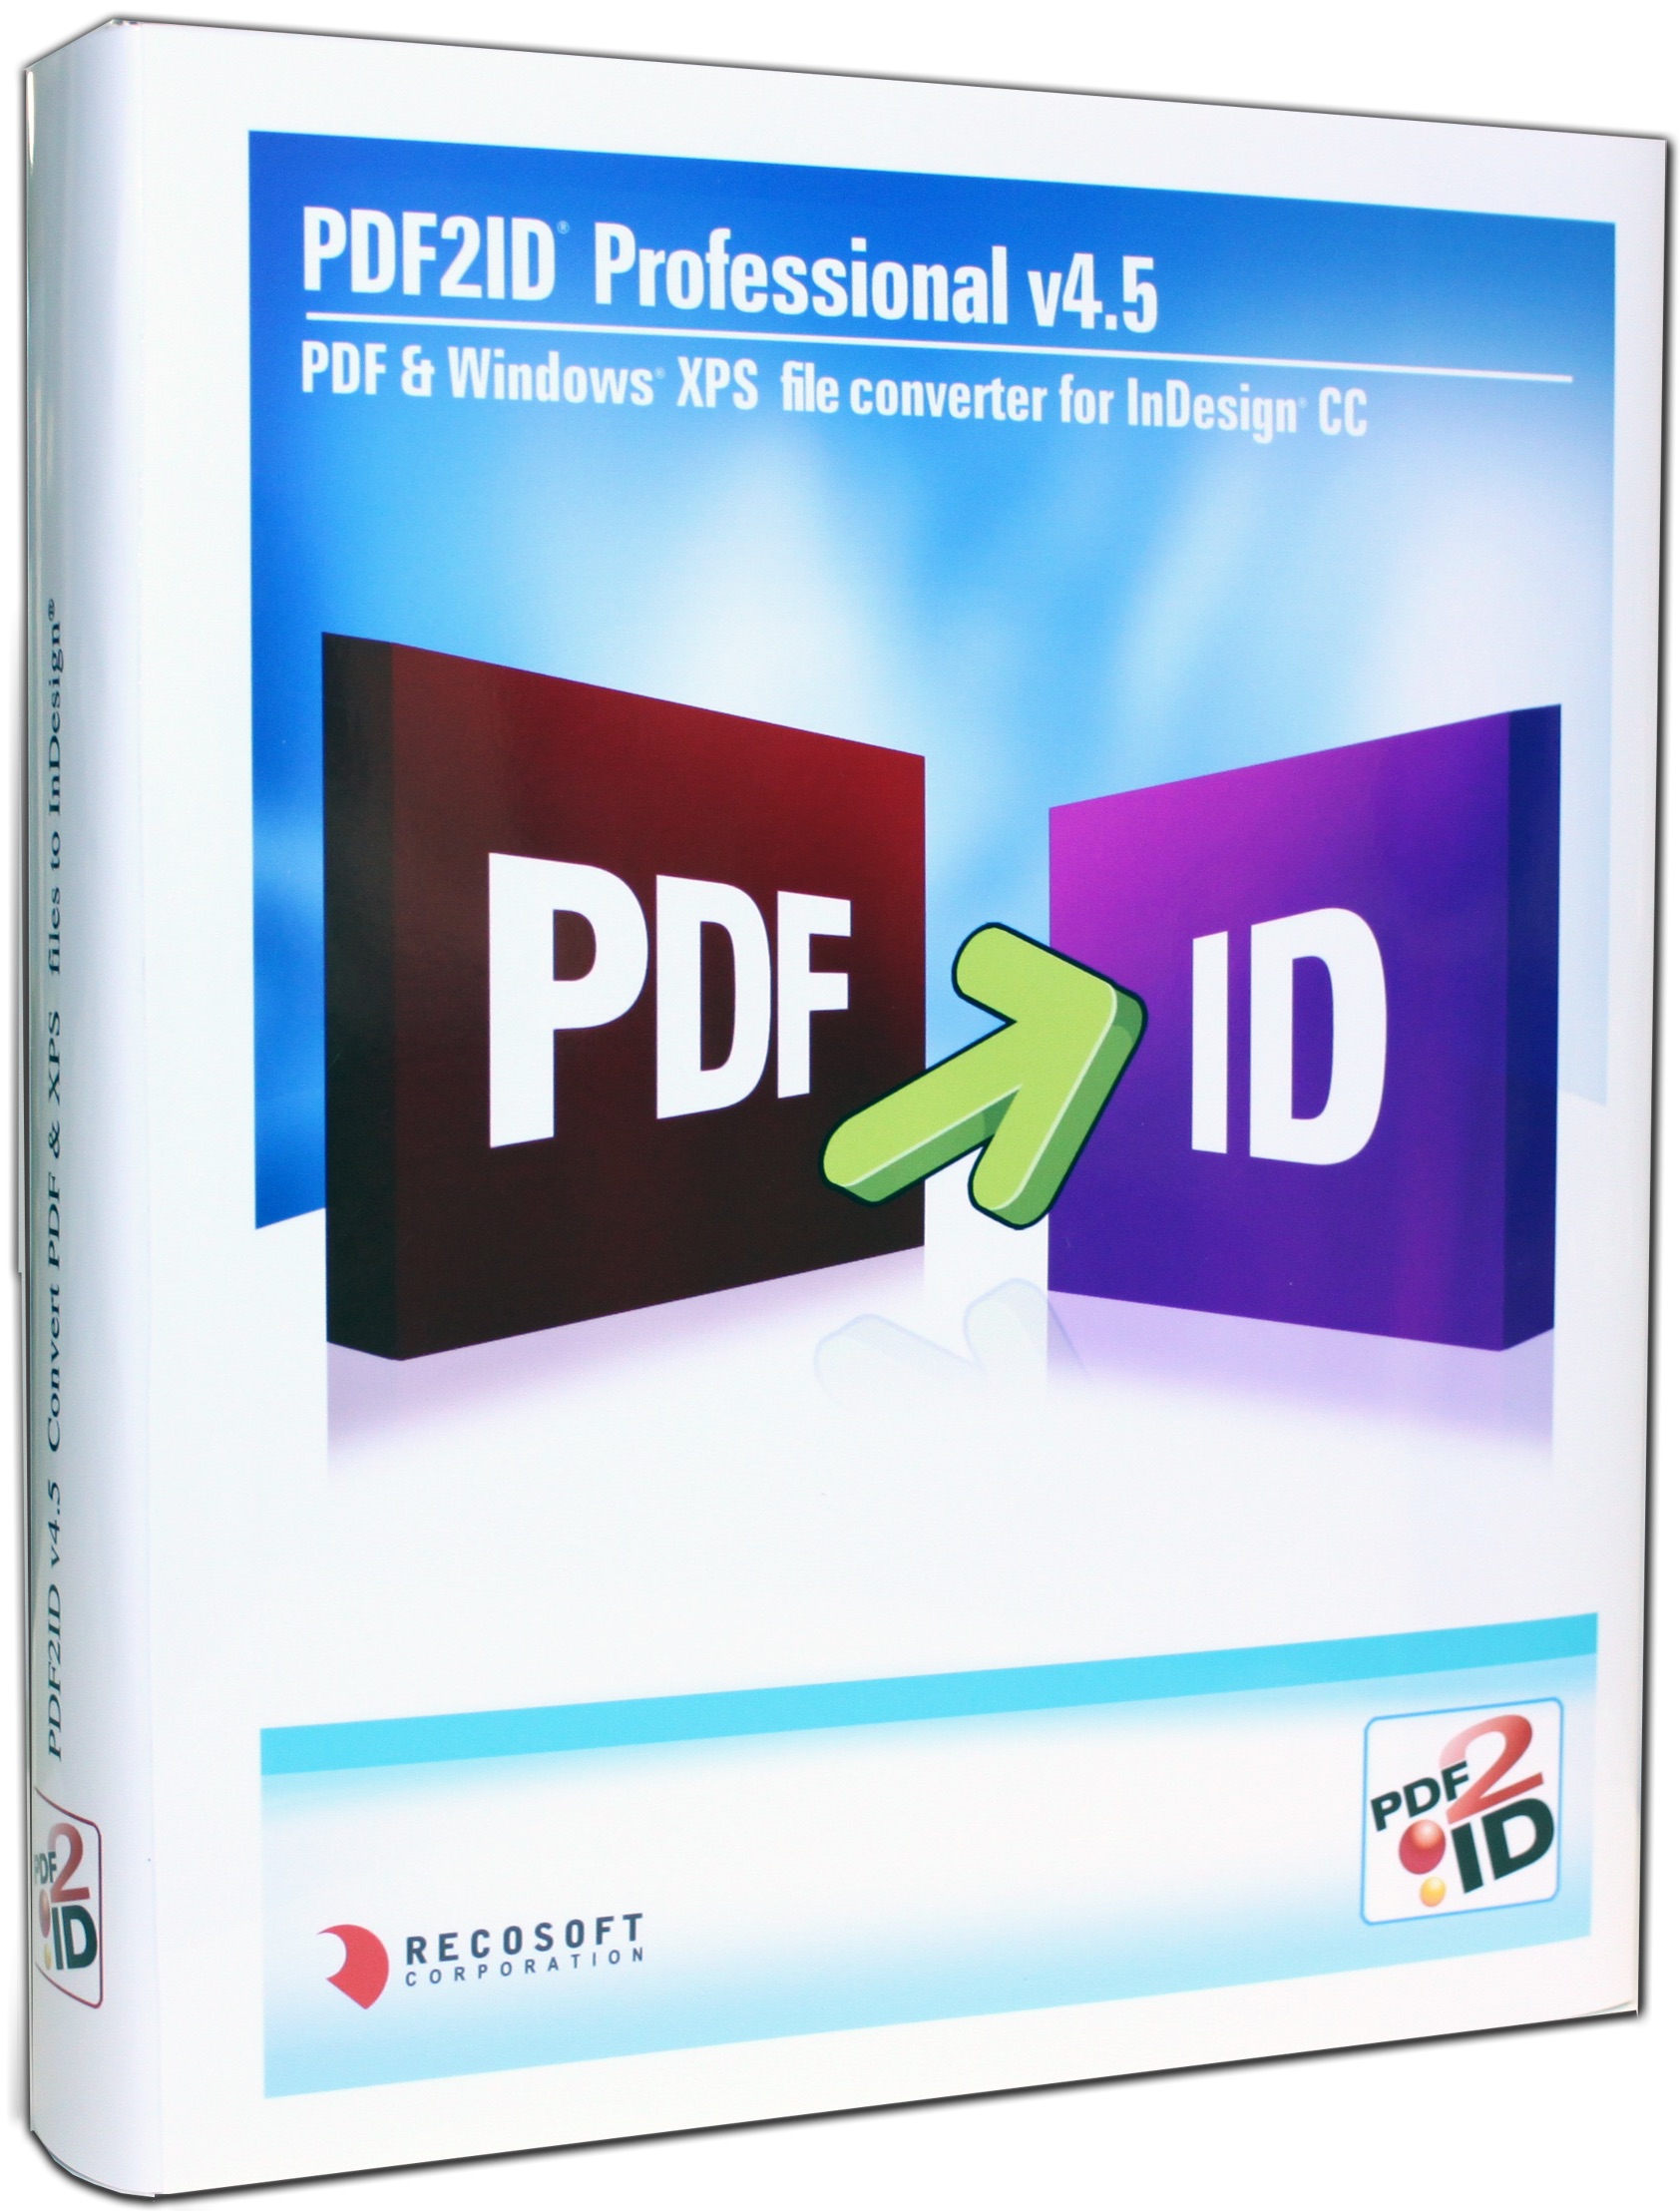 pdf2id professional v4.5